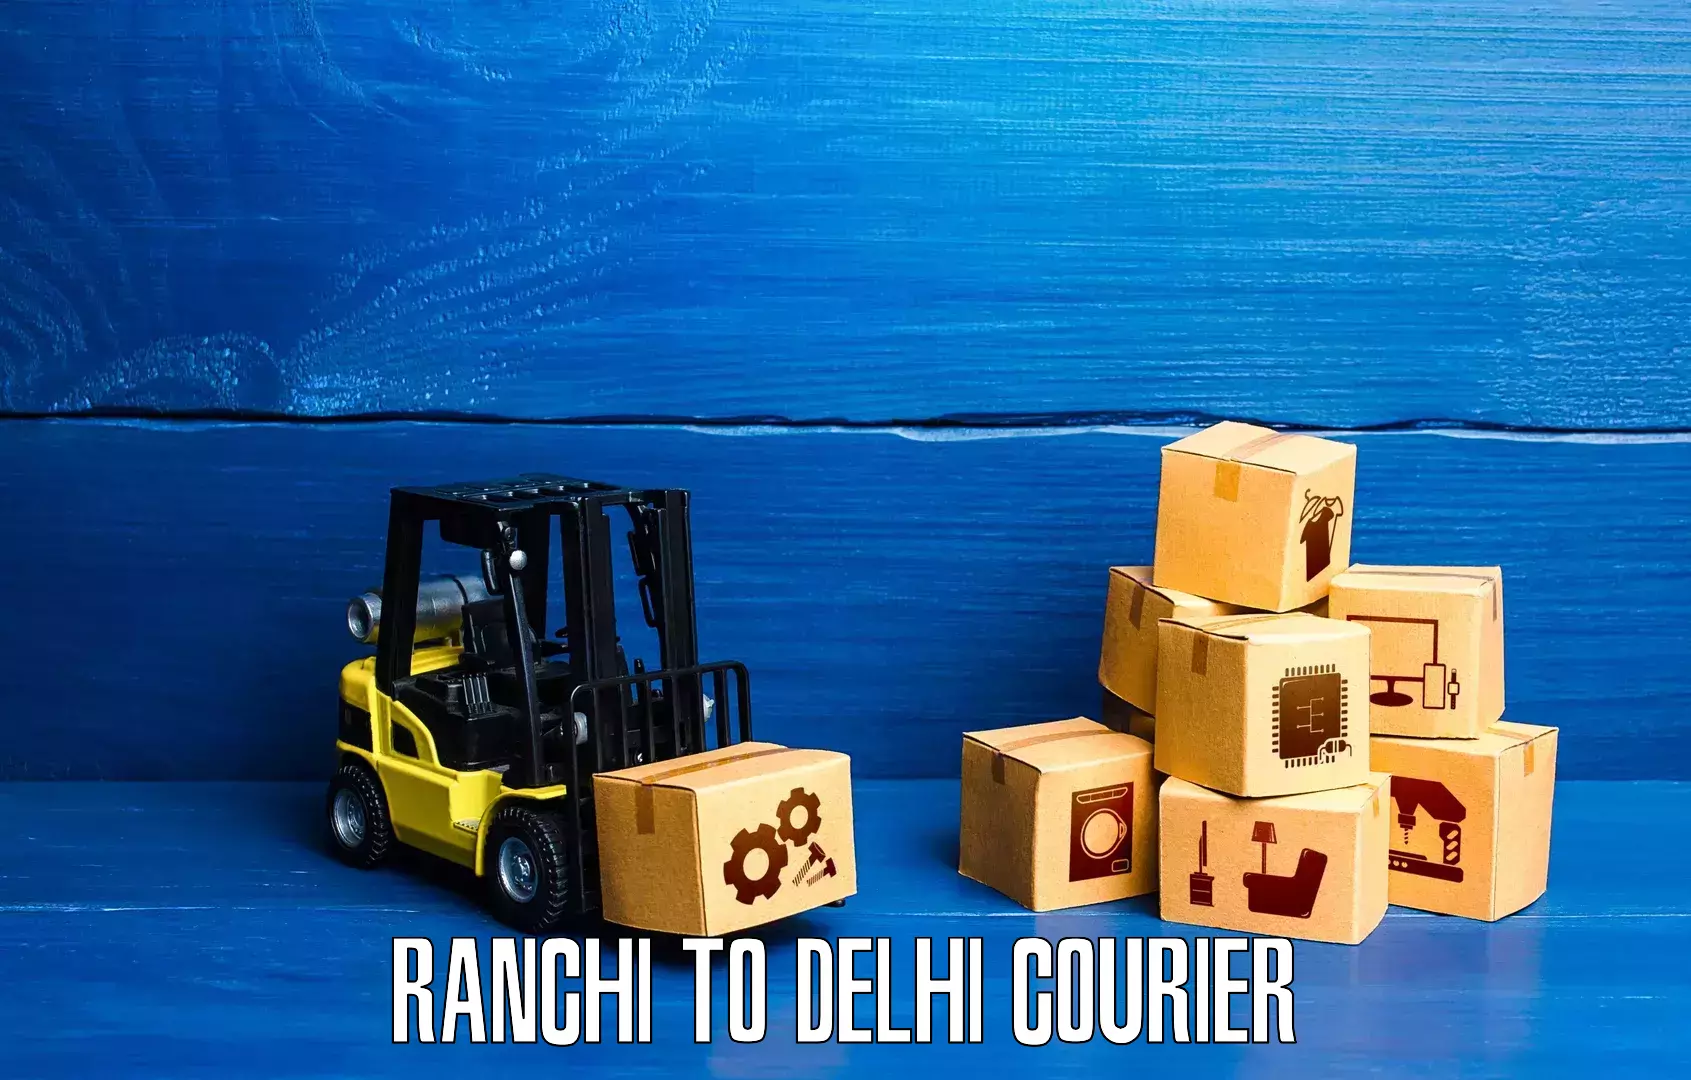 Express mail service Ranchi to Delhi